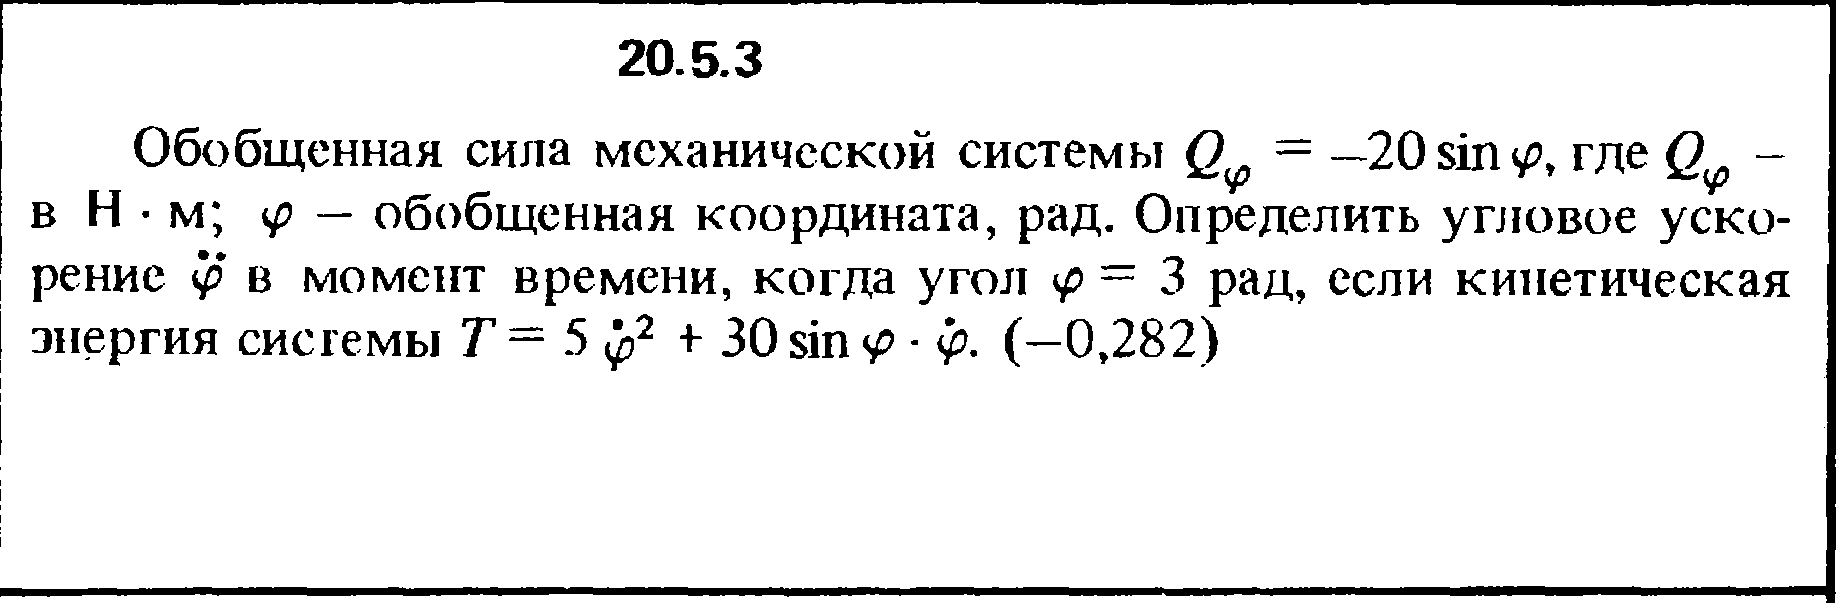 Решение 20.5.3 из сборника (решебника) Кепе О.Е. 1989